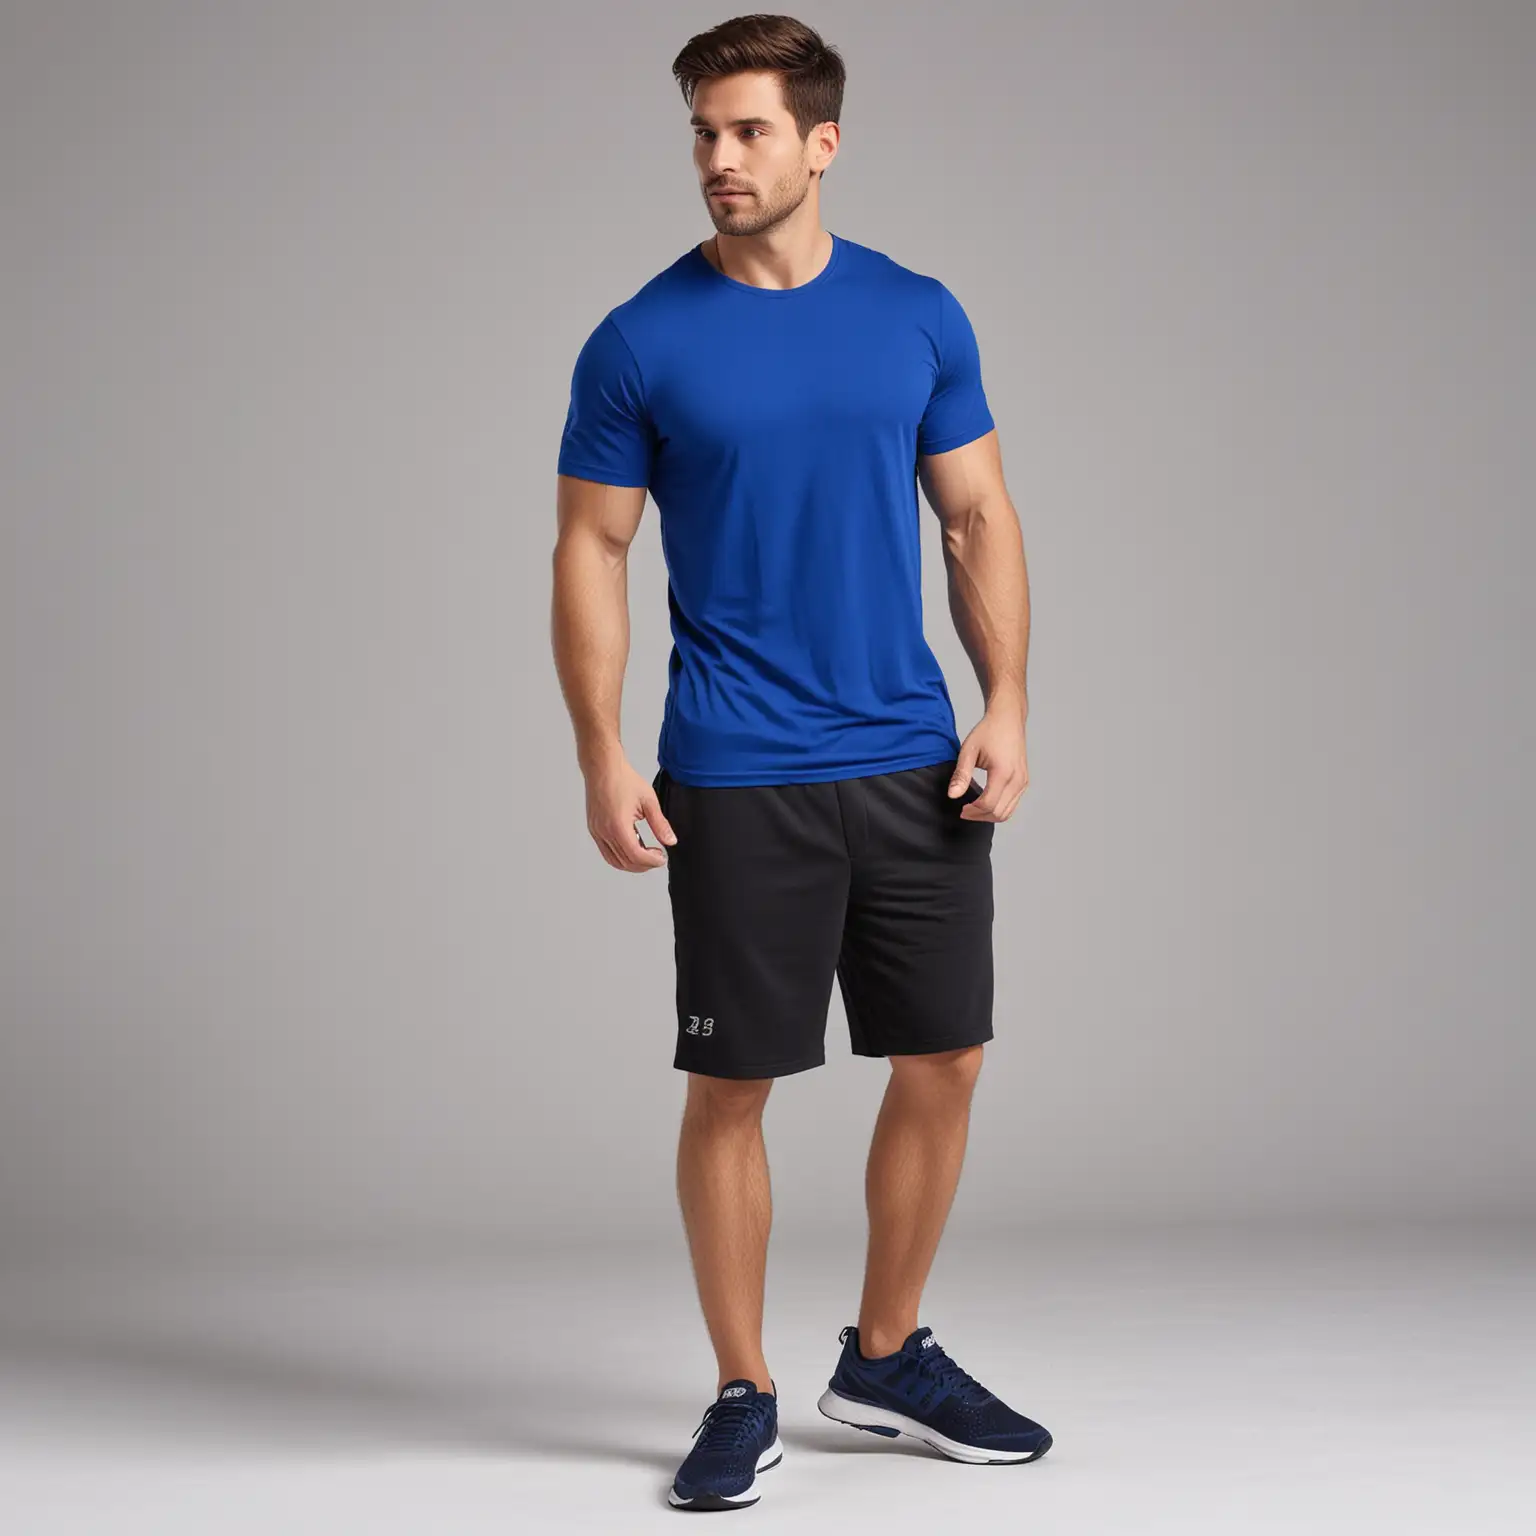 Man Wearing Plain Royal Blue TShirt for Gym Workout